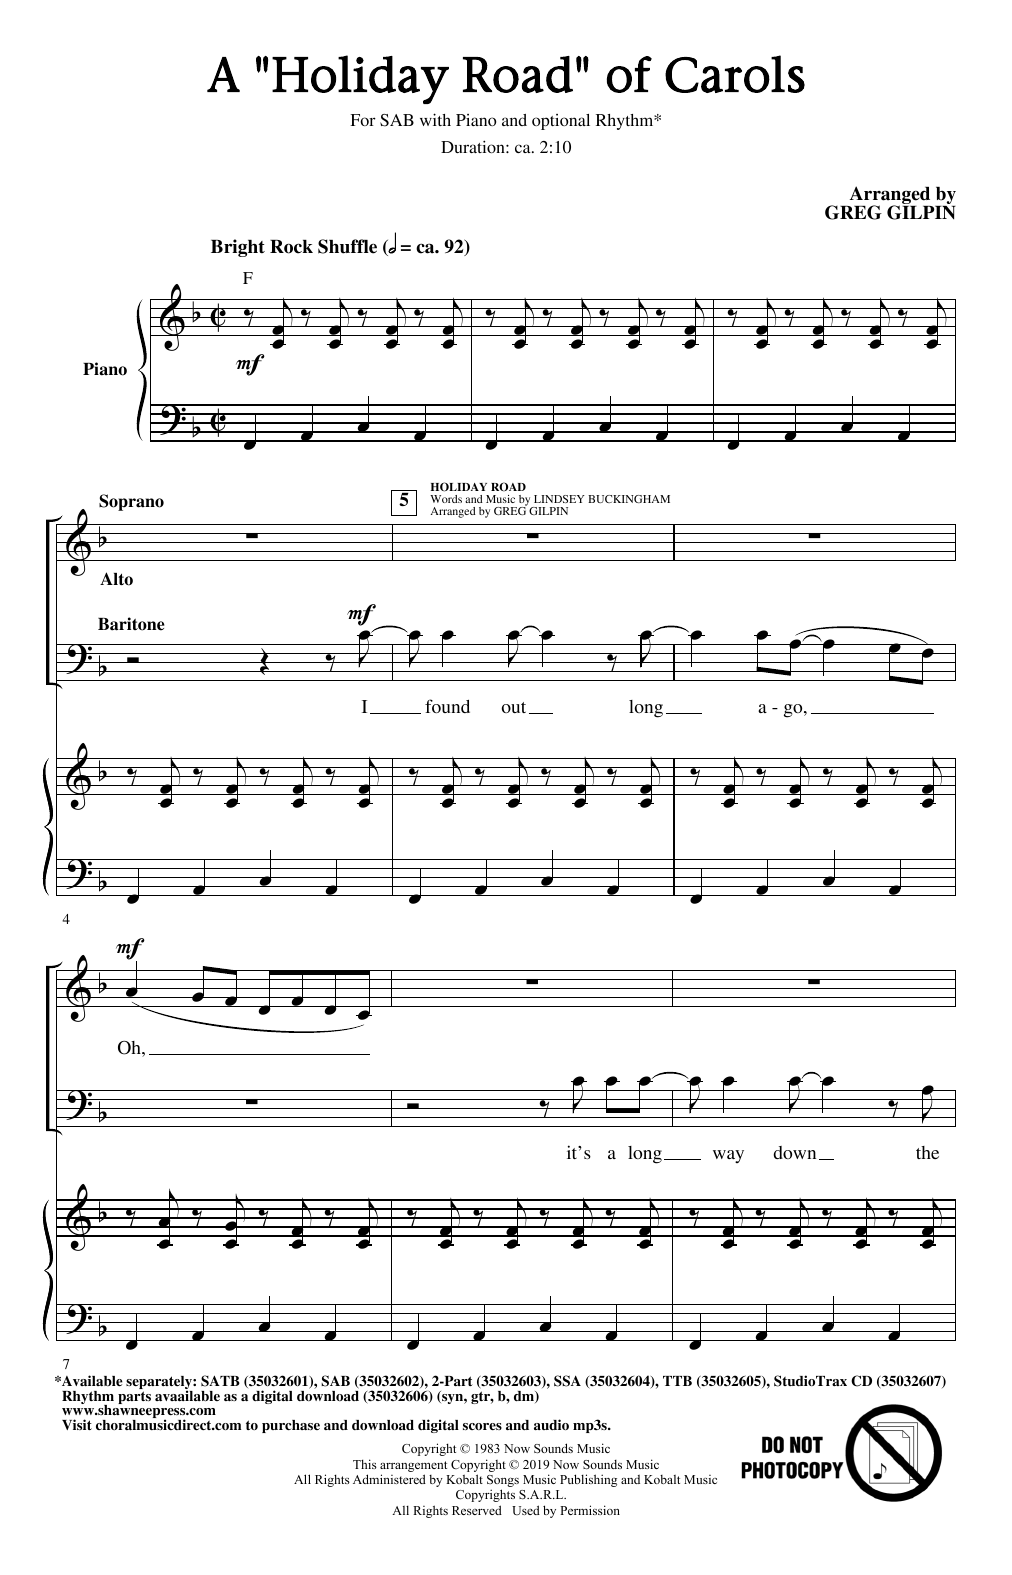 Greg Gilpin A Holiday Road Of Carols (arr. Greg Gilpin) Sheet Music Notes & Chords for SAB Choir - Download or Print PDF